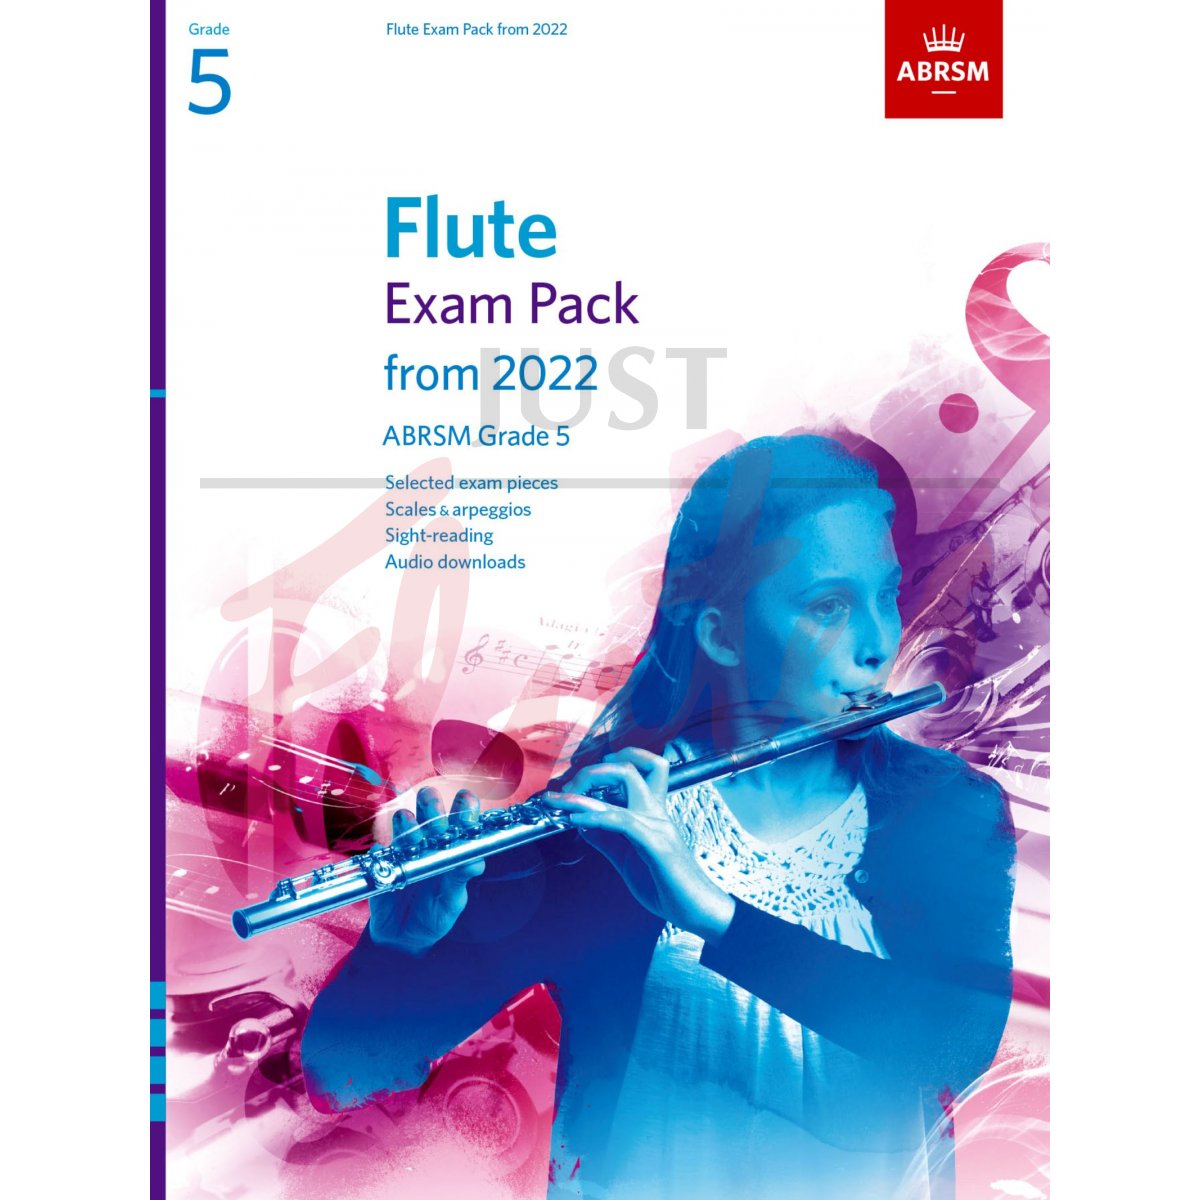 Flute Exam Pack from 2022 Grade 5